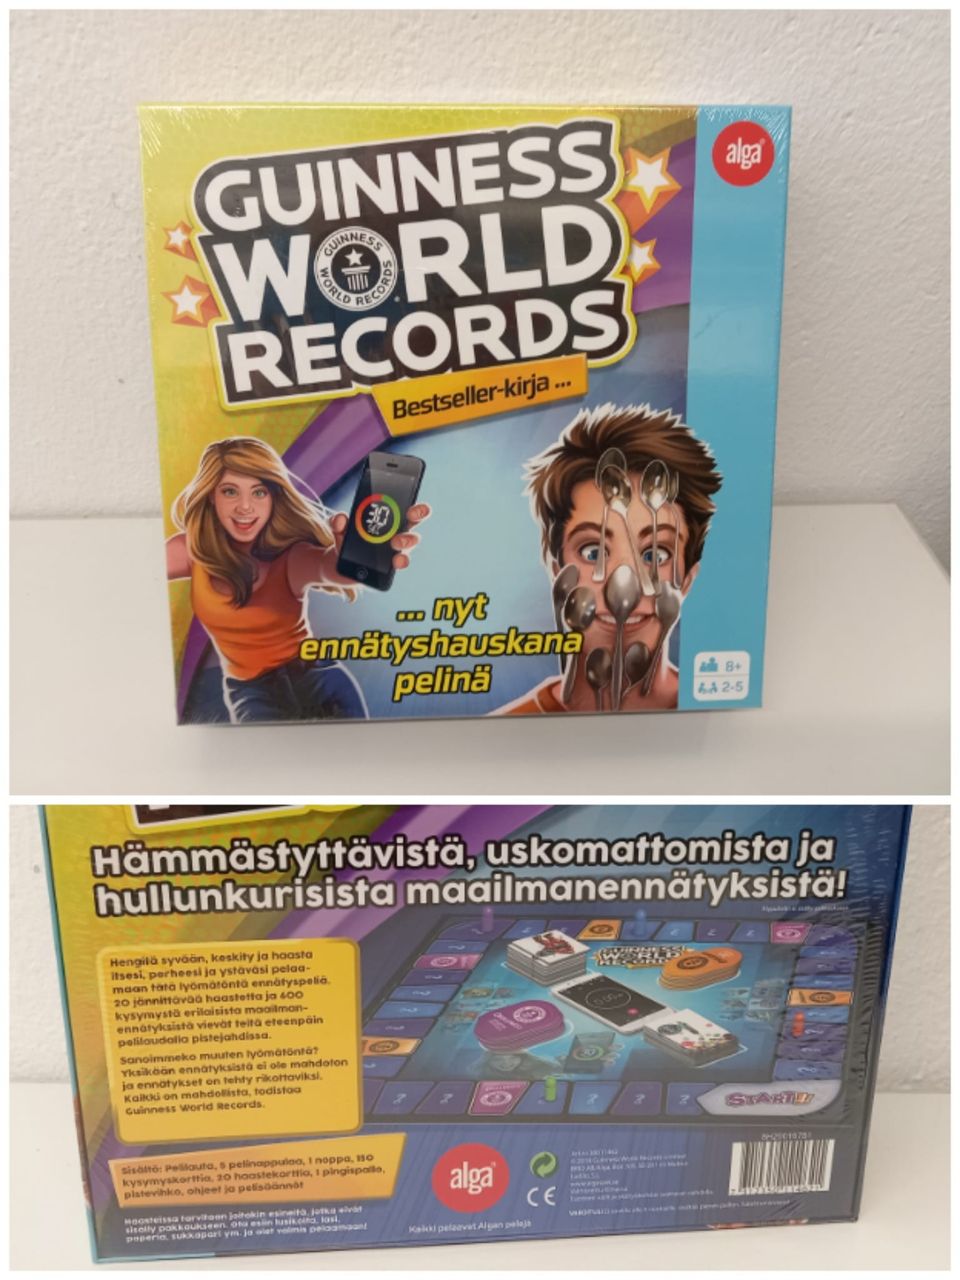 Guinness world records - lautapeli (Alga)